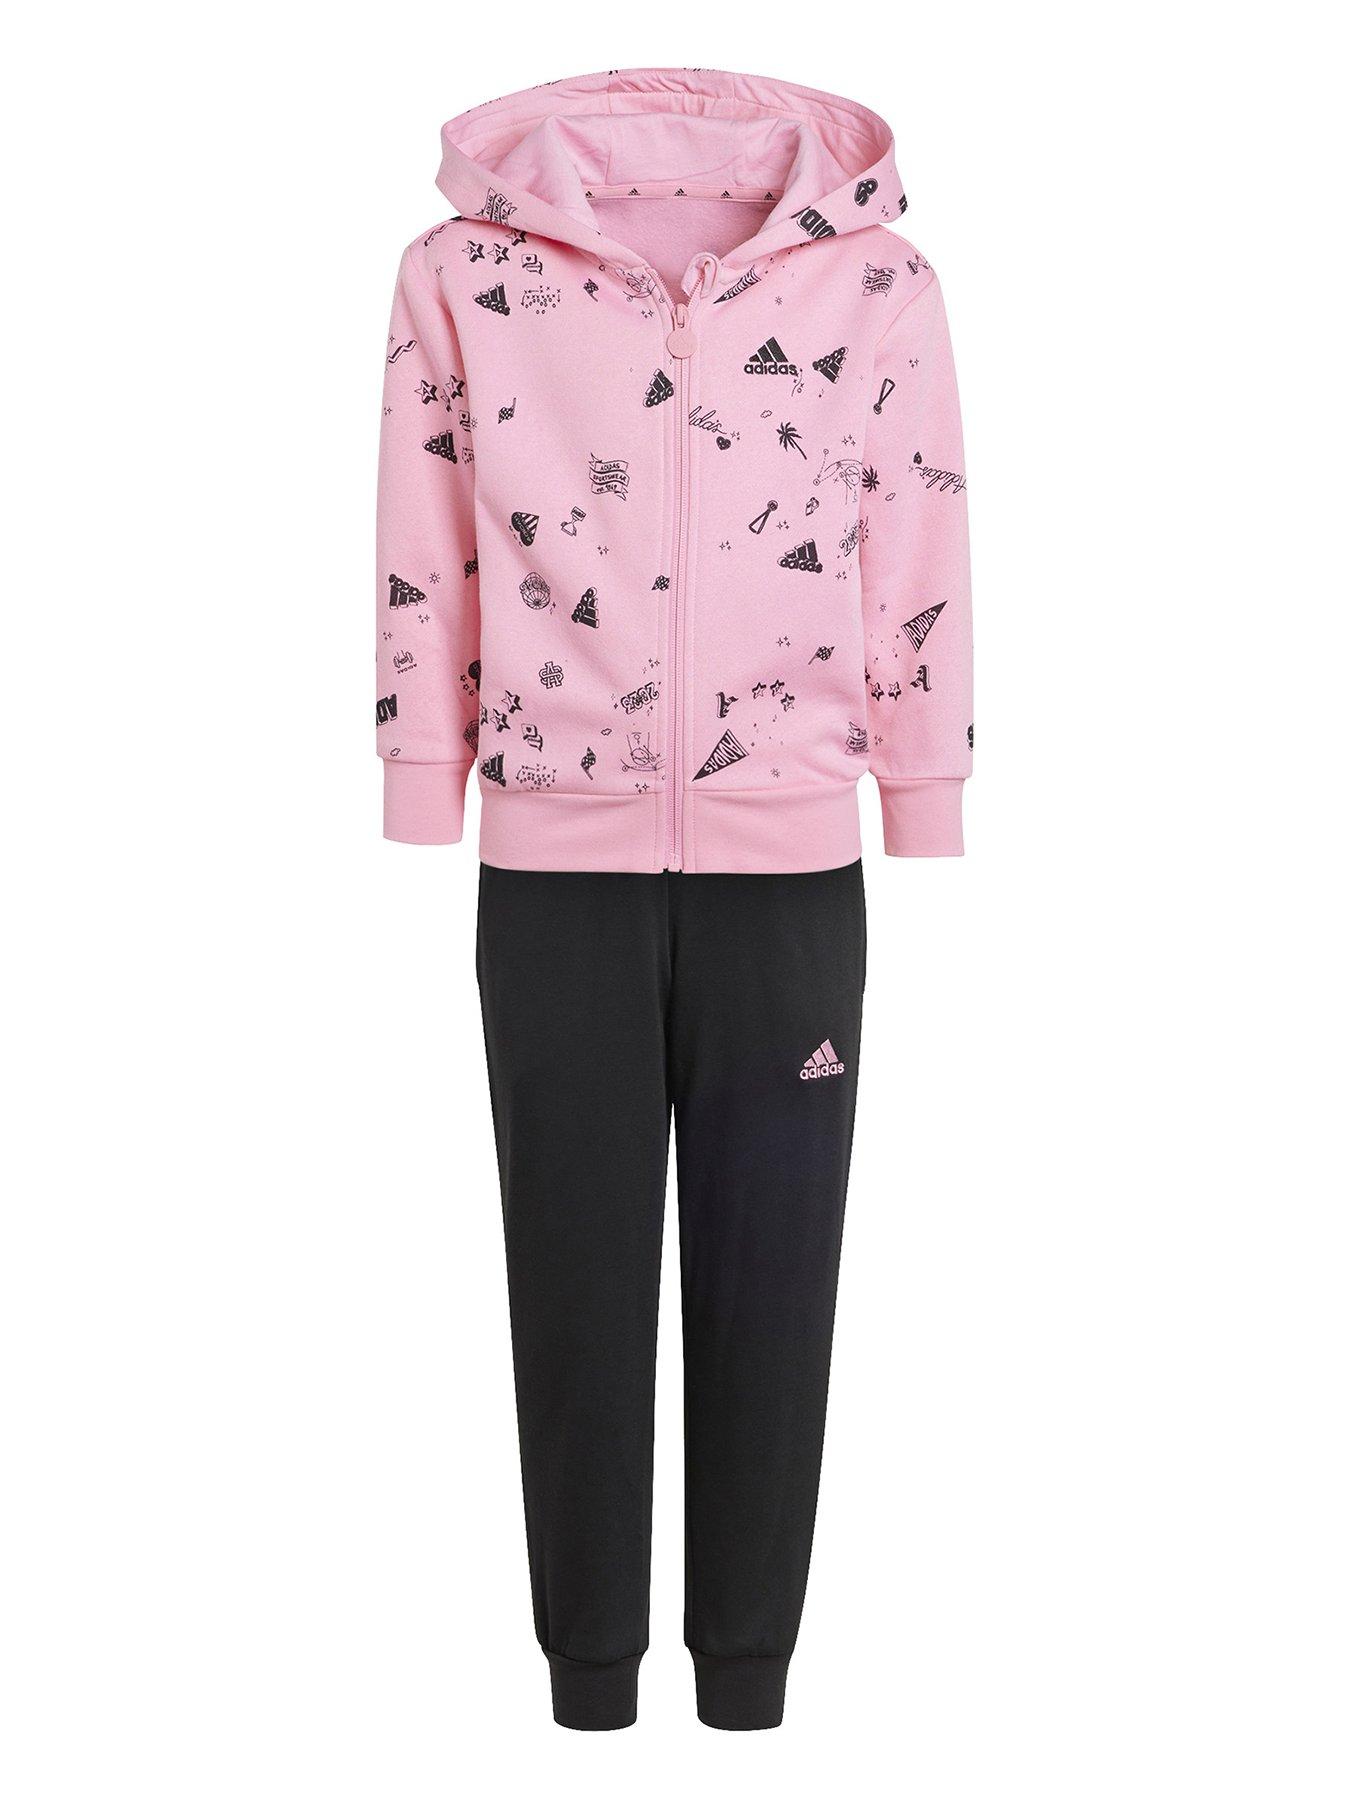 Pink | Adidas | Girls clothes | Child & baby | Sweatshirts